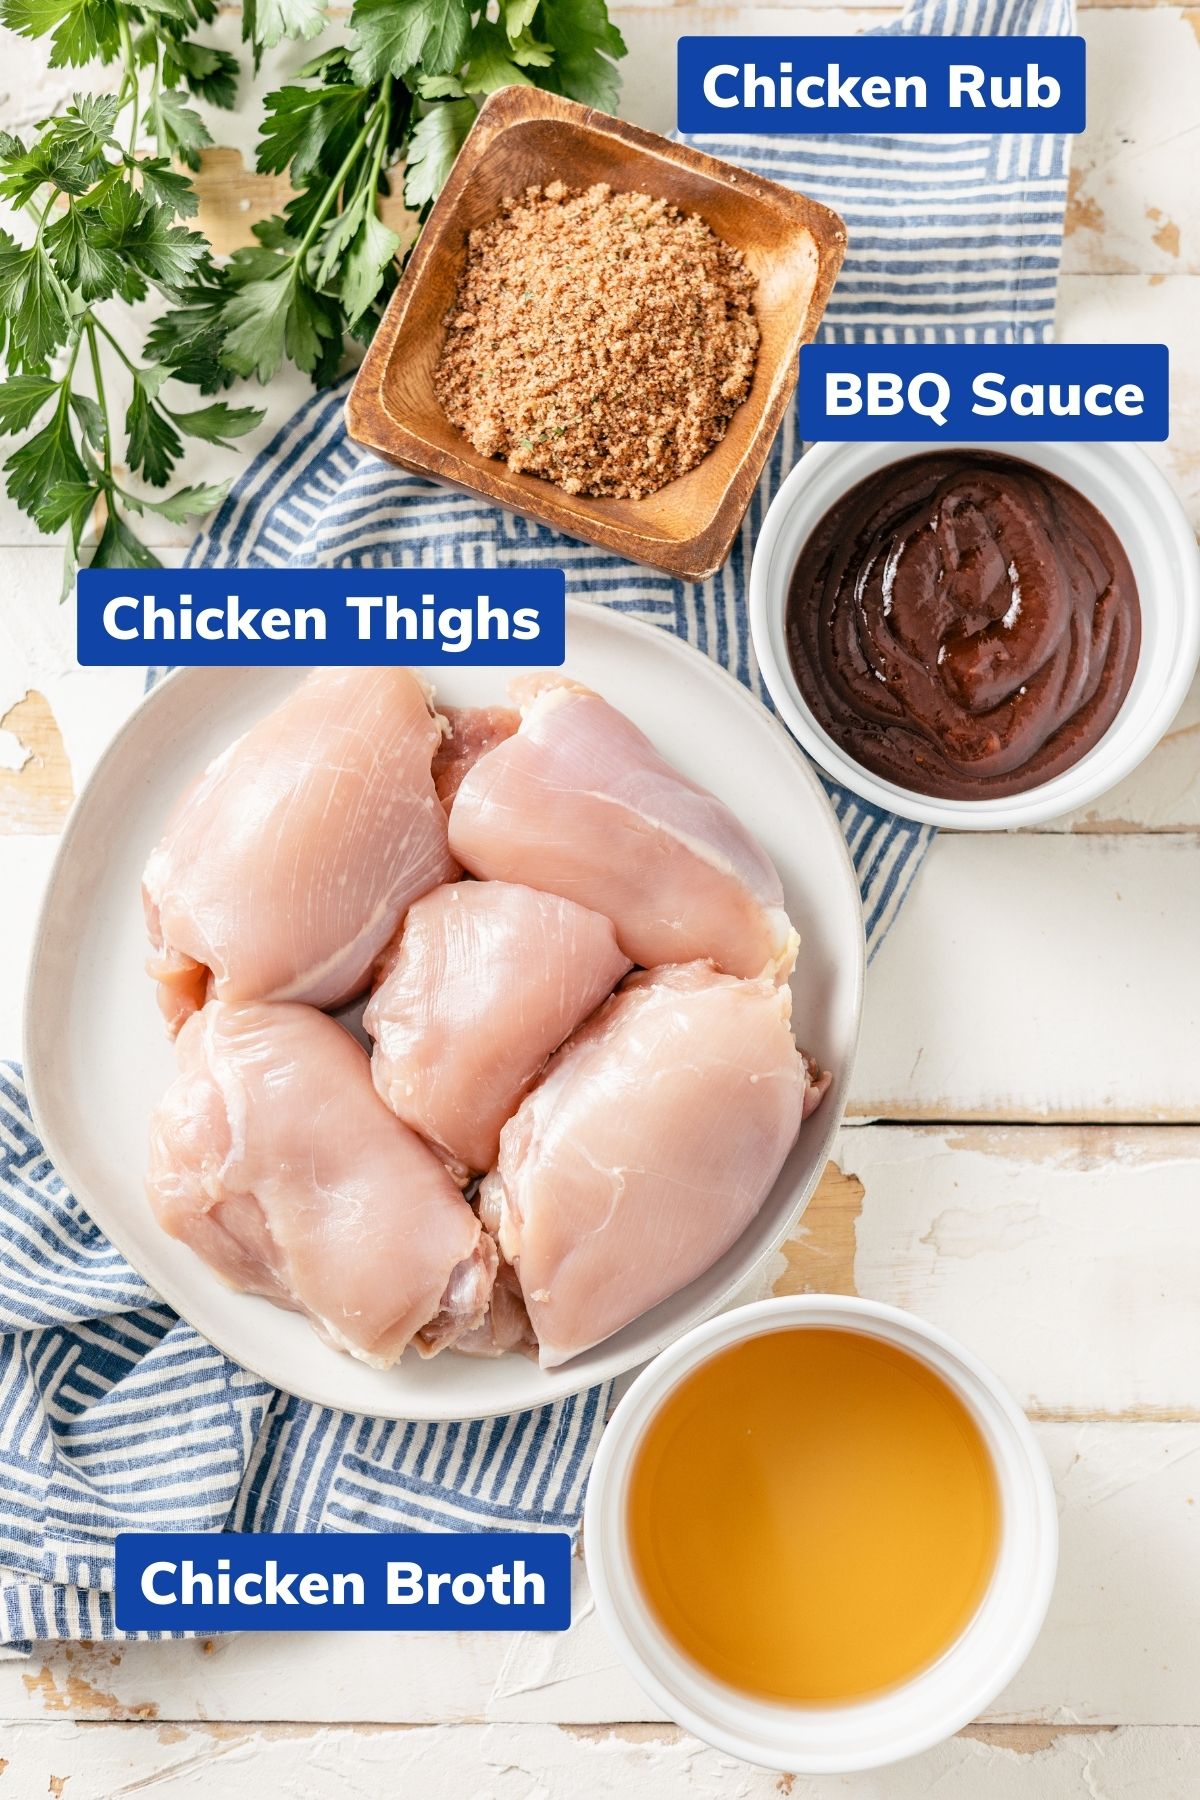 bbq chicken rub, chicken thighs, bbq sauce, and chicken broth in separate bowls